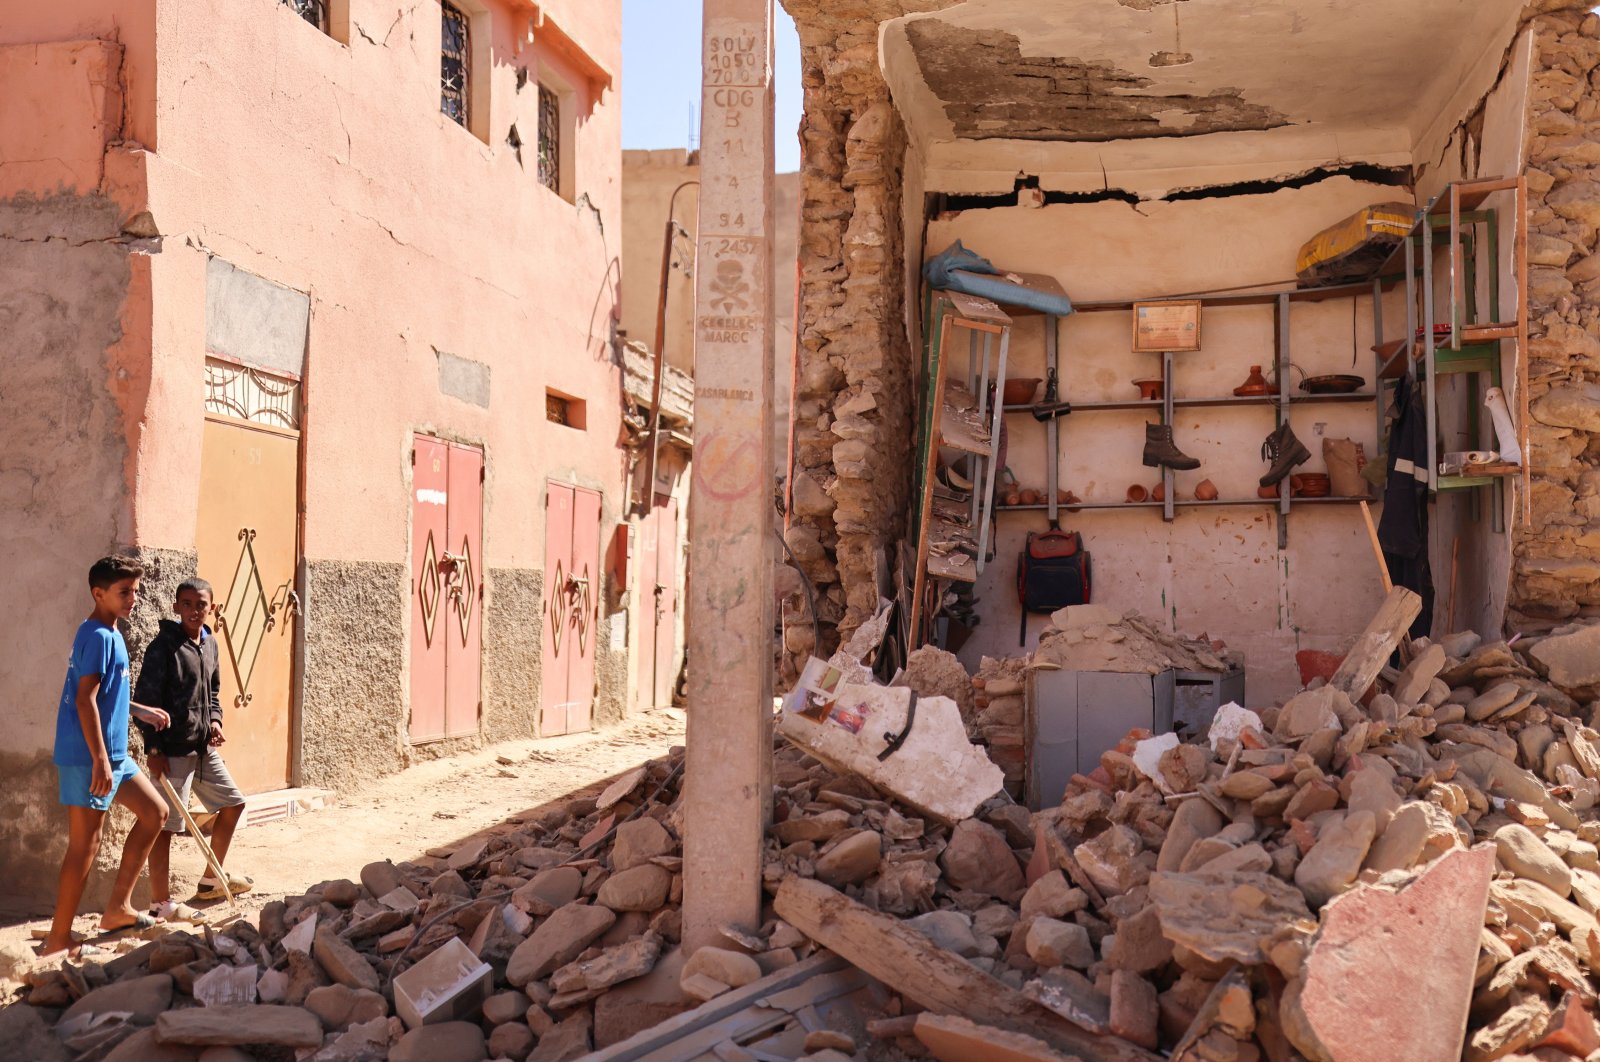 Türkiye stands ready to aid quake-hit Morocco: Erdoğan